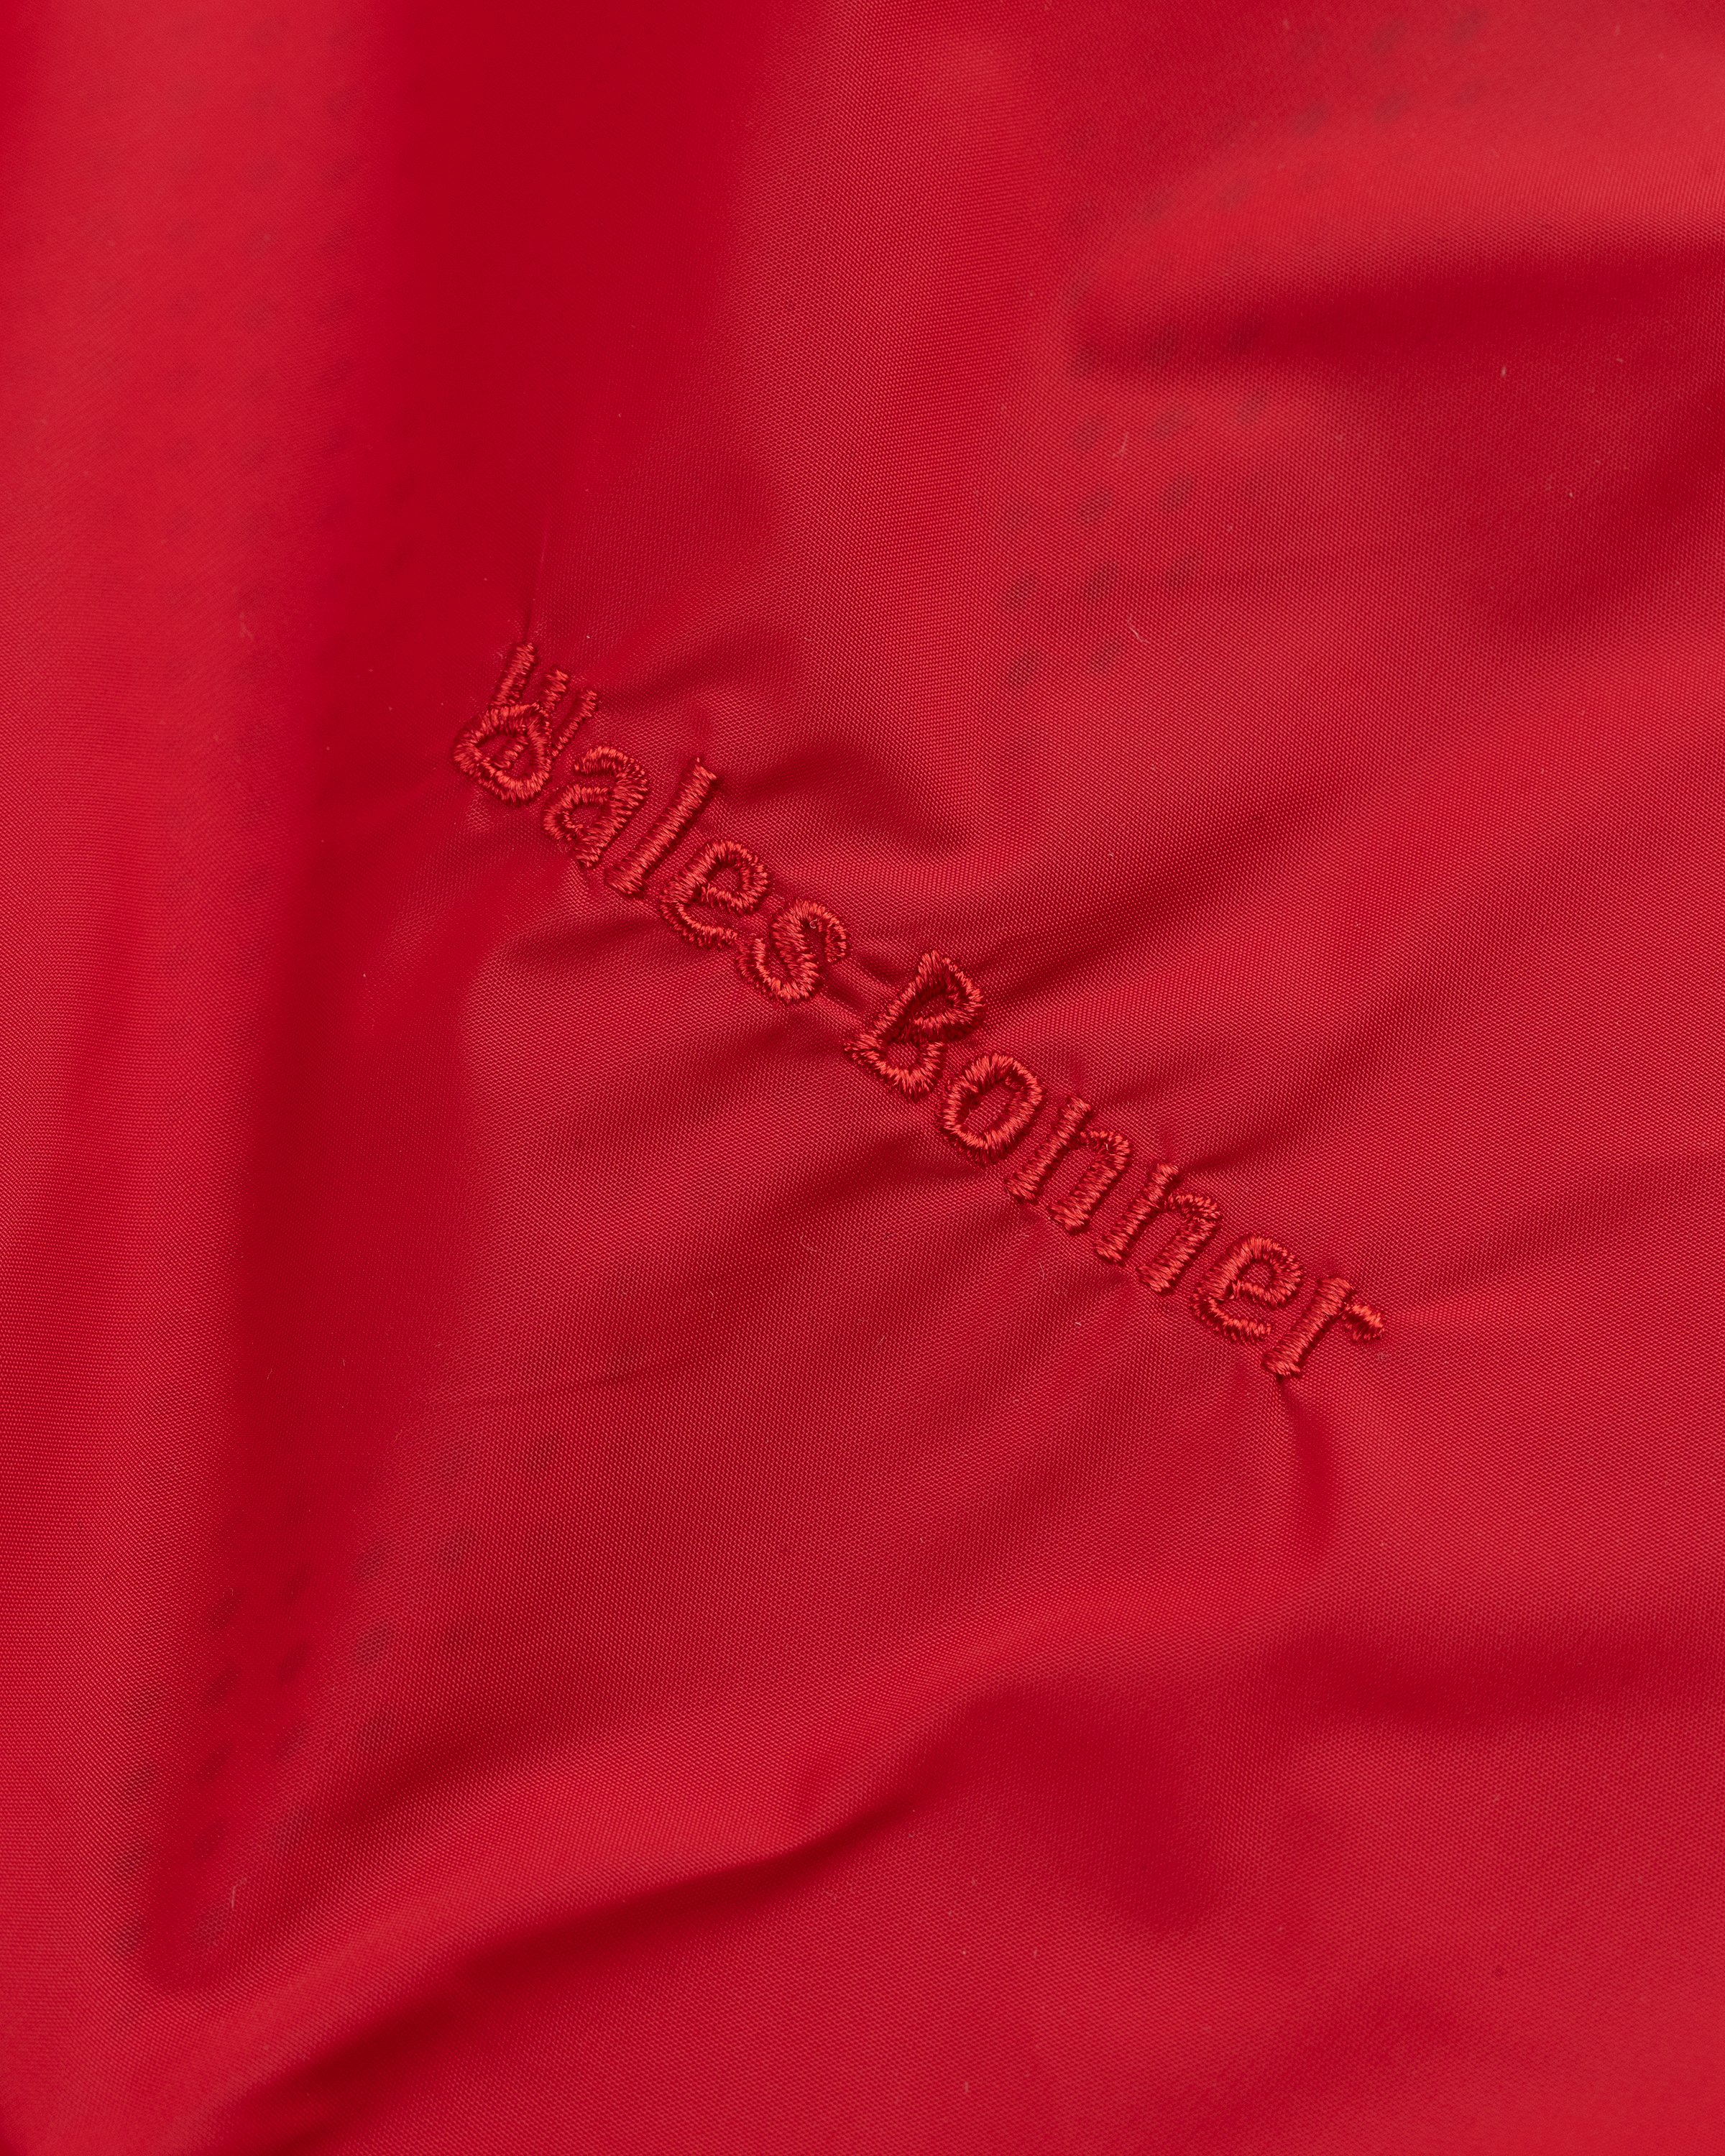 Adidas x Wales Bonner - WB Light Jacket Scarlet - Clothing - Red - Image 7